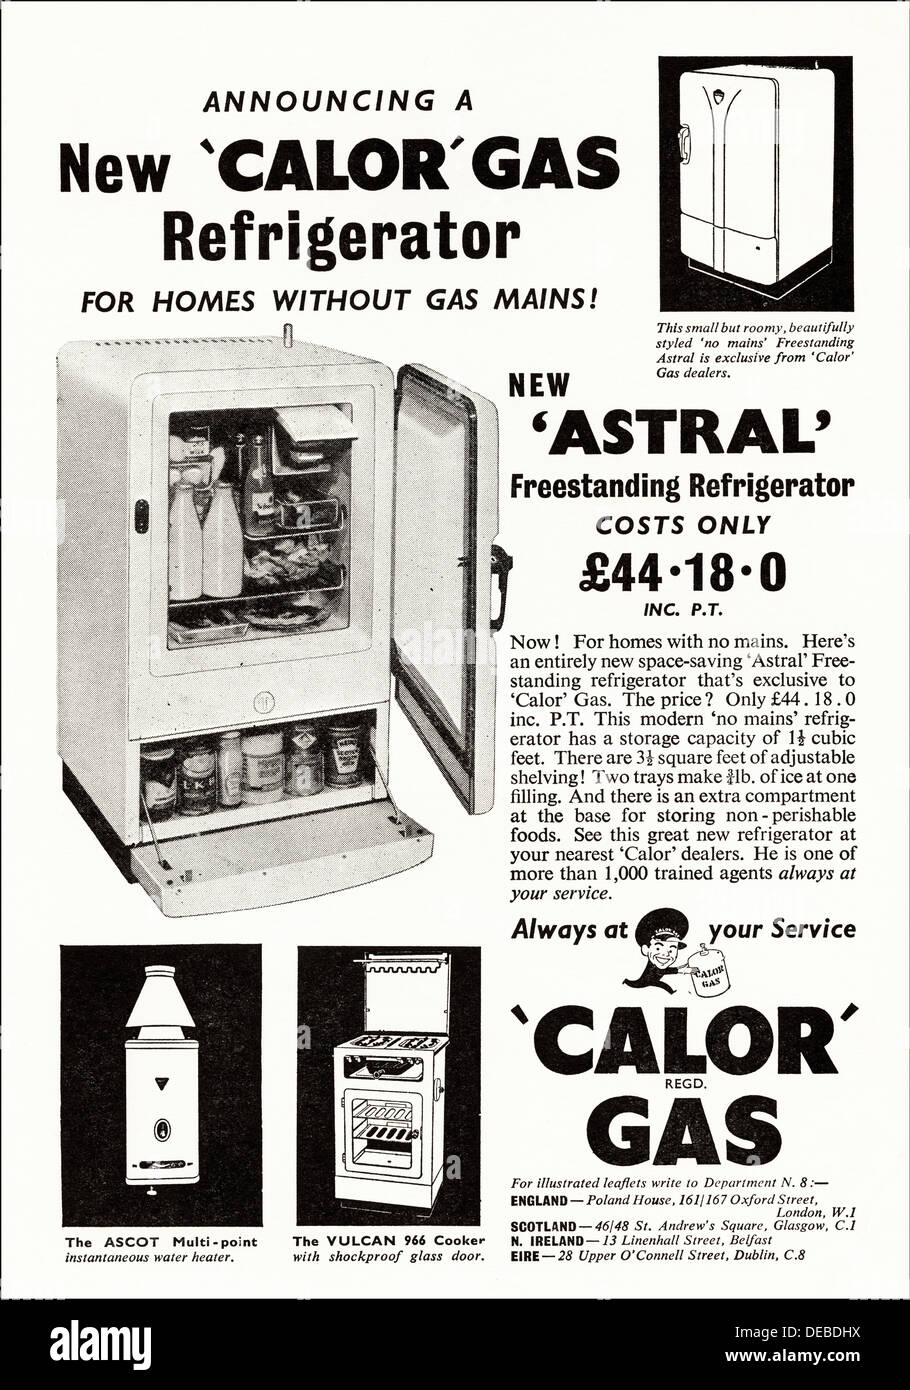 Werbung Werbung CALOR GAS Kühlschrank Magazin Anzeige ca. 1954  Stockfotografie - Alamy